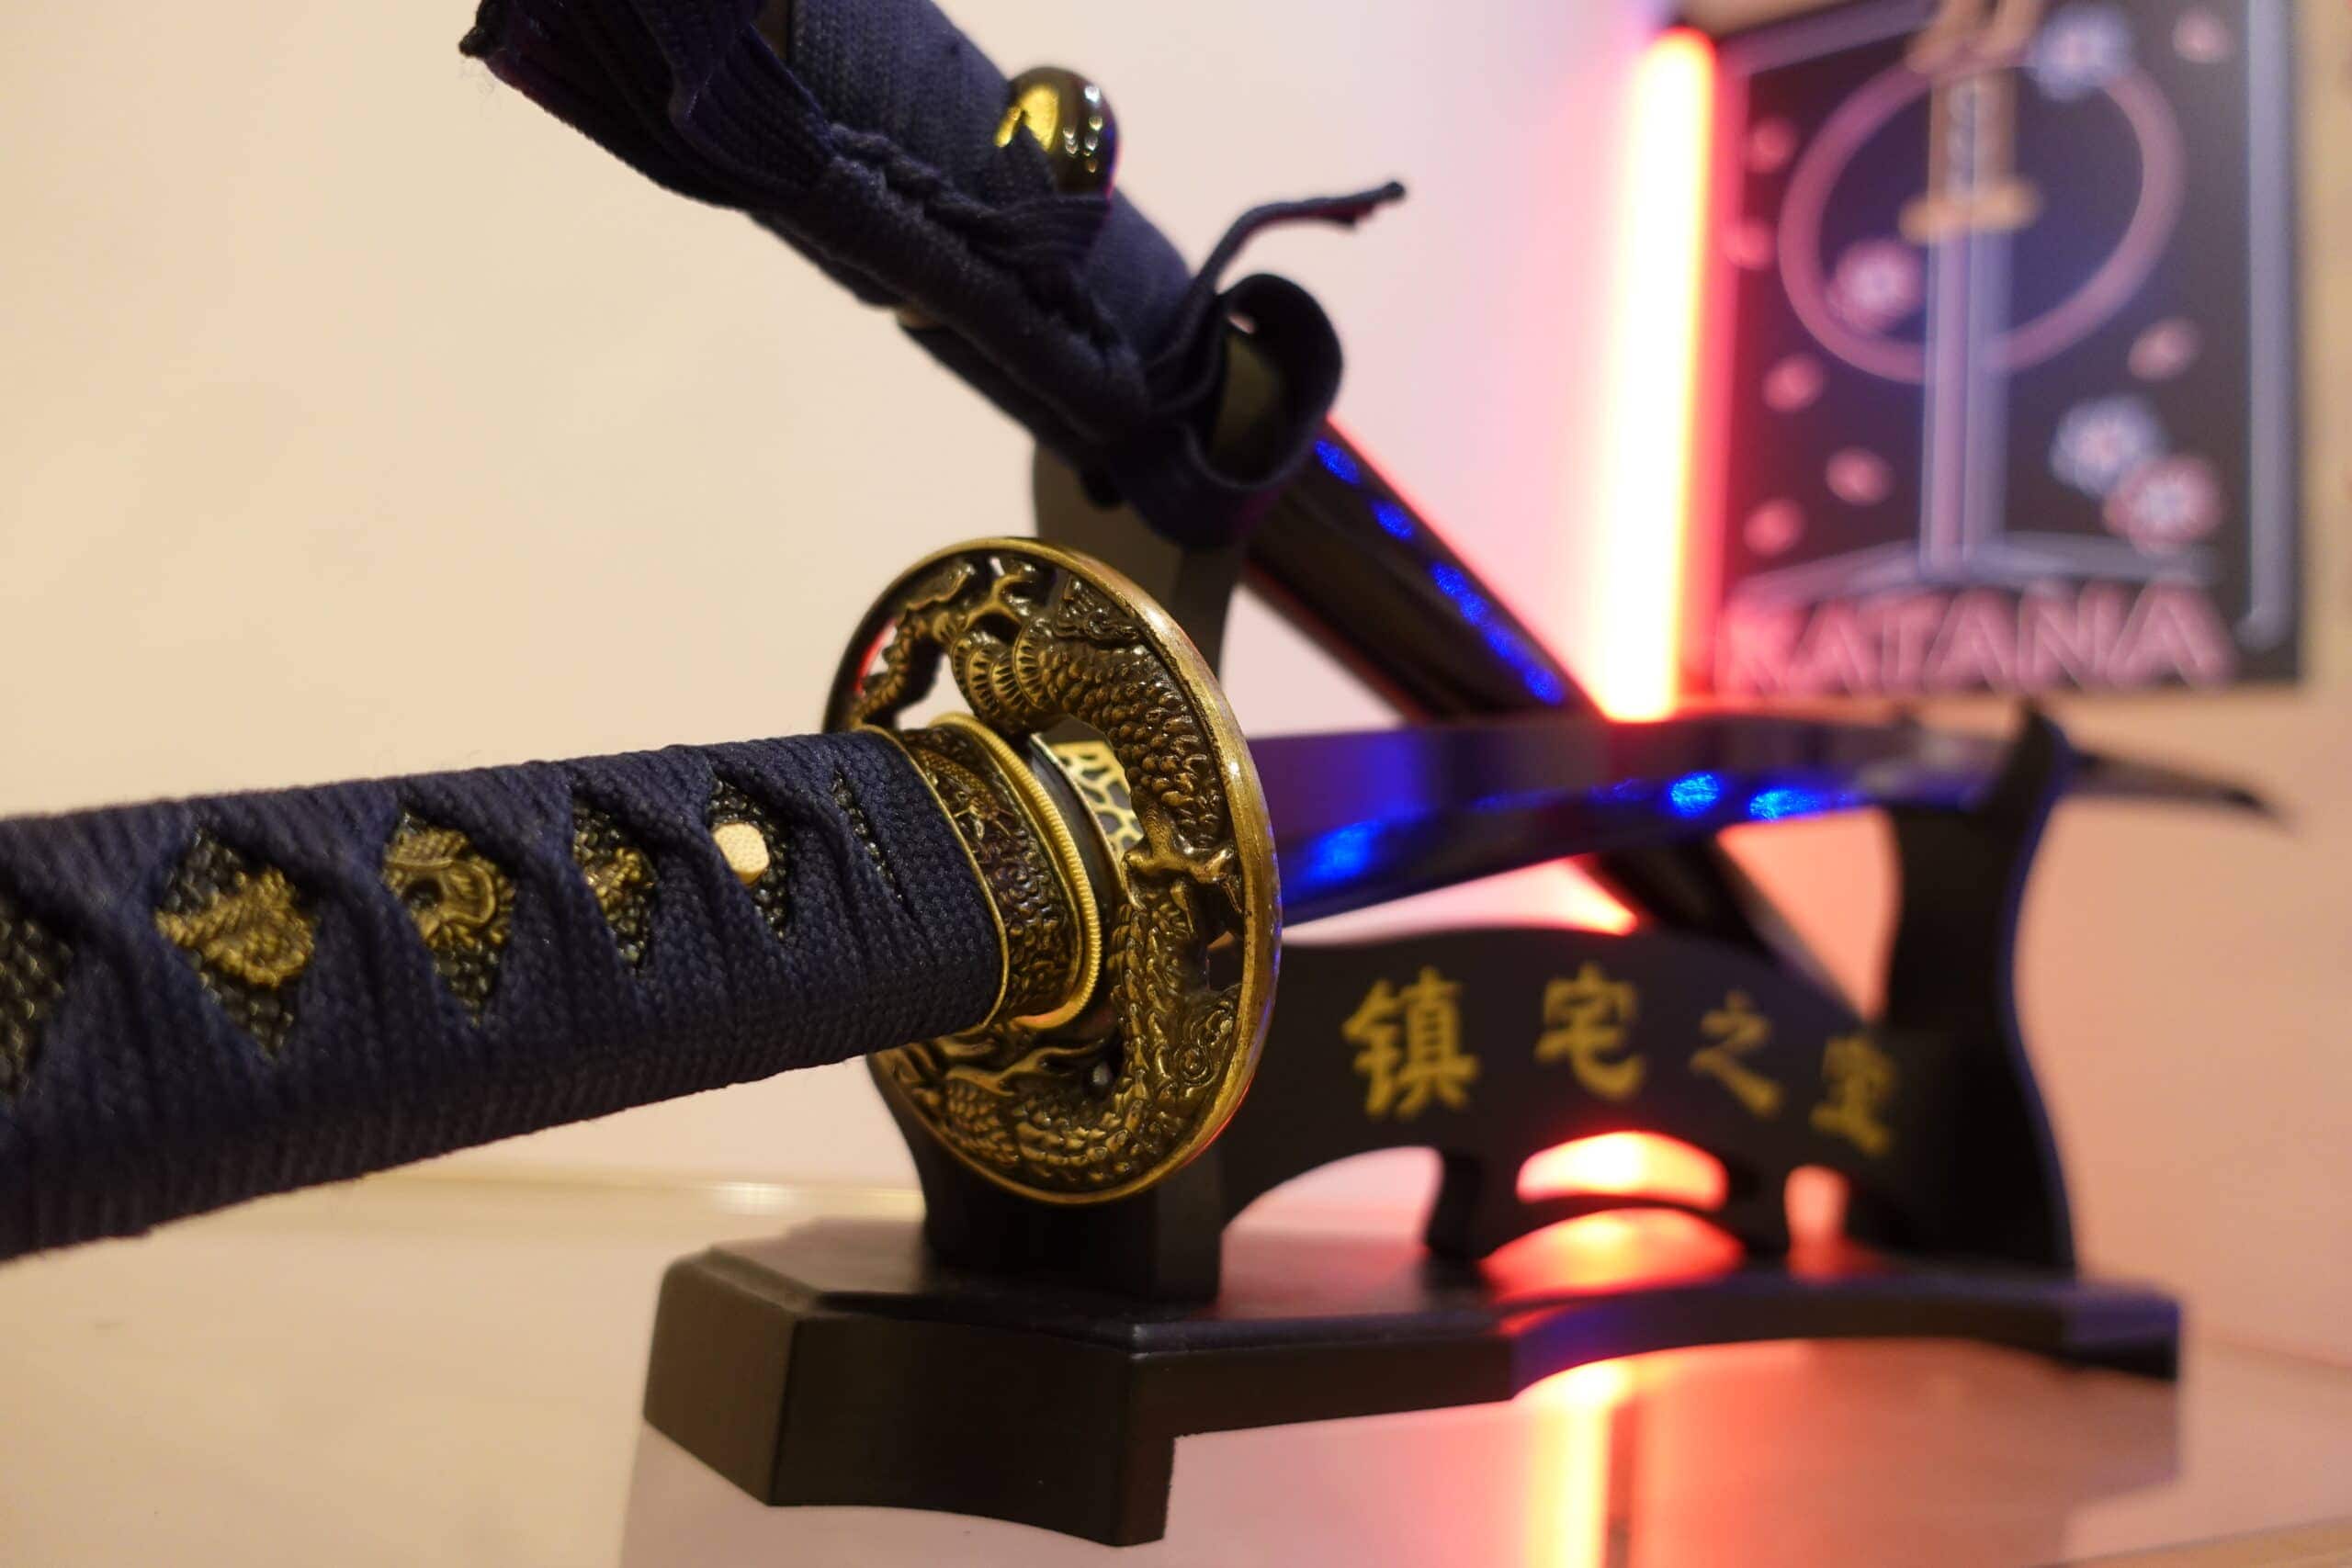 dragon samurai swords